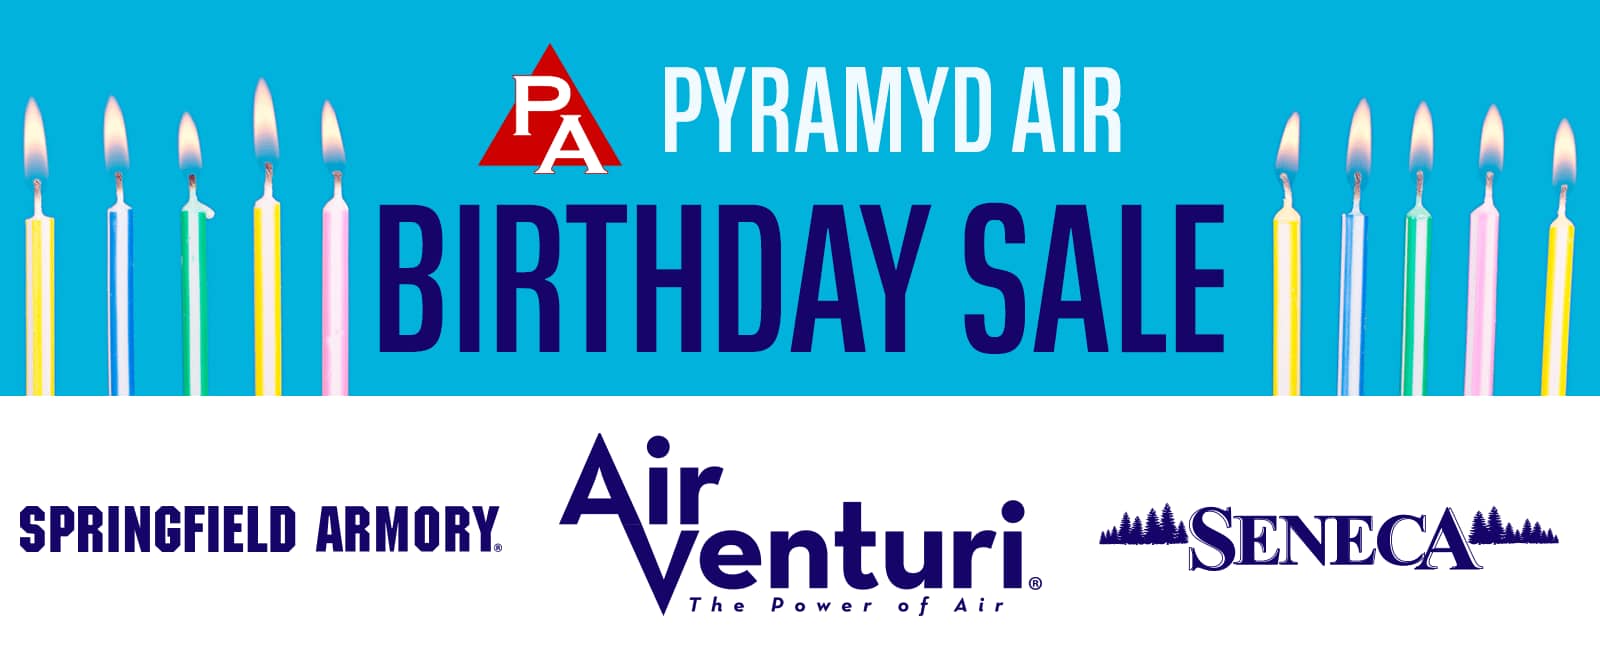 Pyramyd Air turns 26 this week!